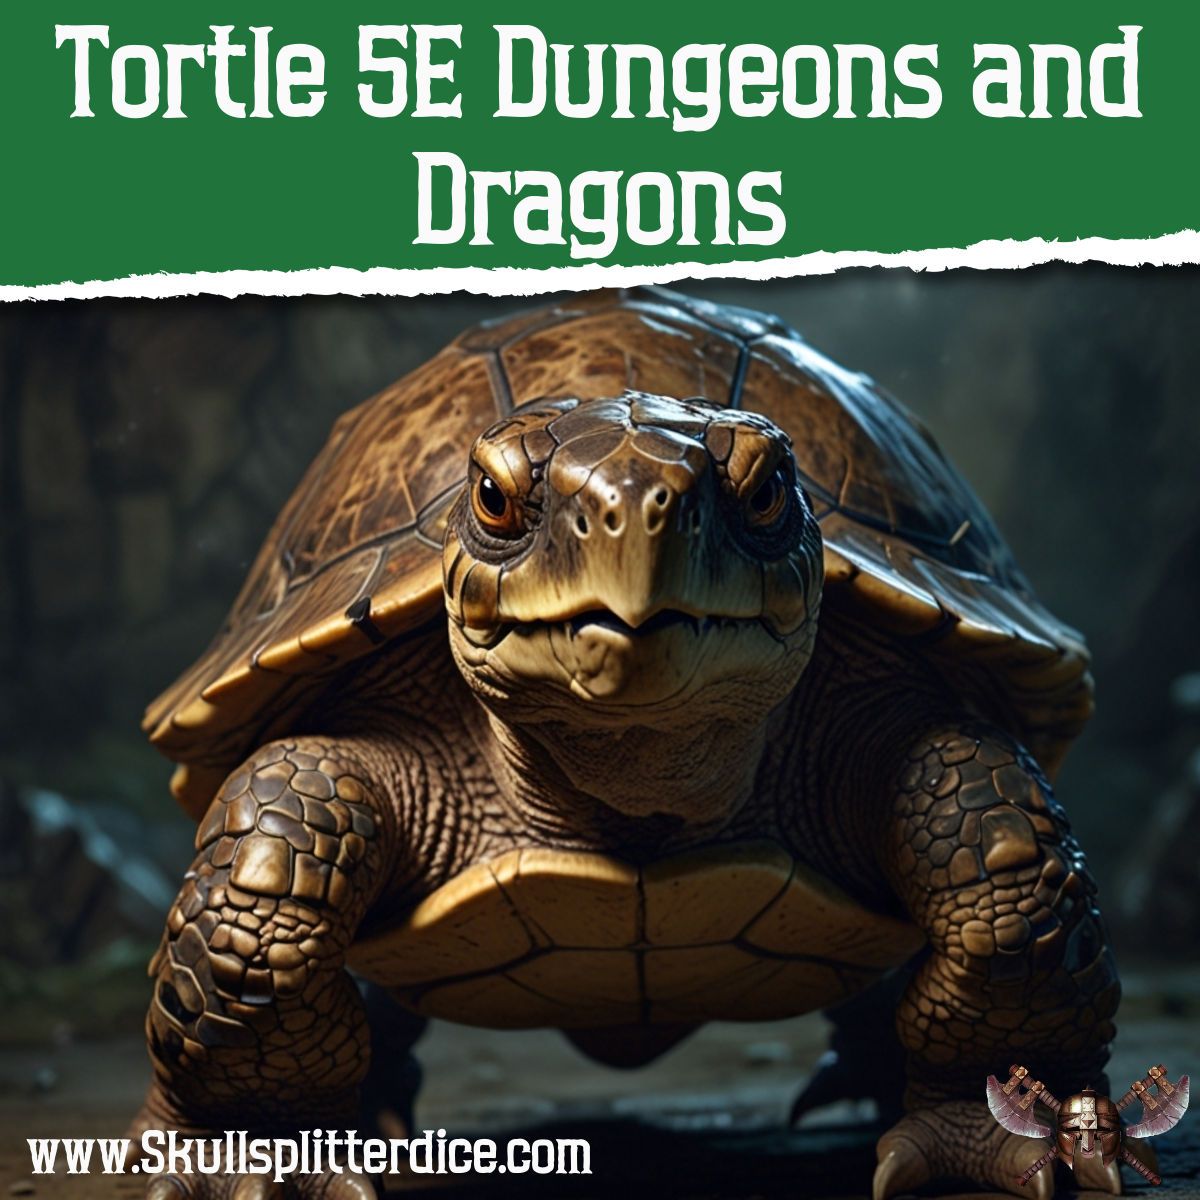 Learn more about tortles at our blog!
Explore: skullsplitterdice.com/blogs/dnd/tort…

#dnd #dungeonsanddragons #dnd5e #rpg #tabletoprpg #dice #dnddice #dicesets #rpgdice #tortle #tortlednd #tortle5e